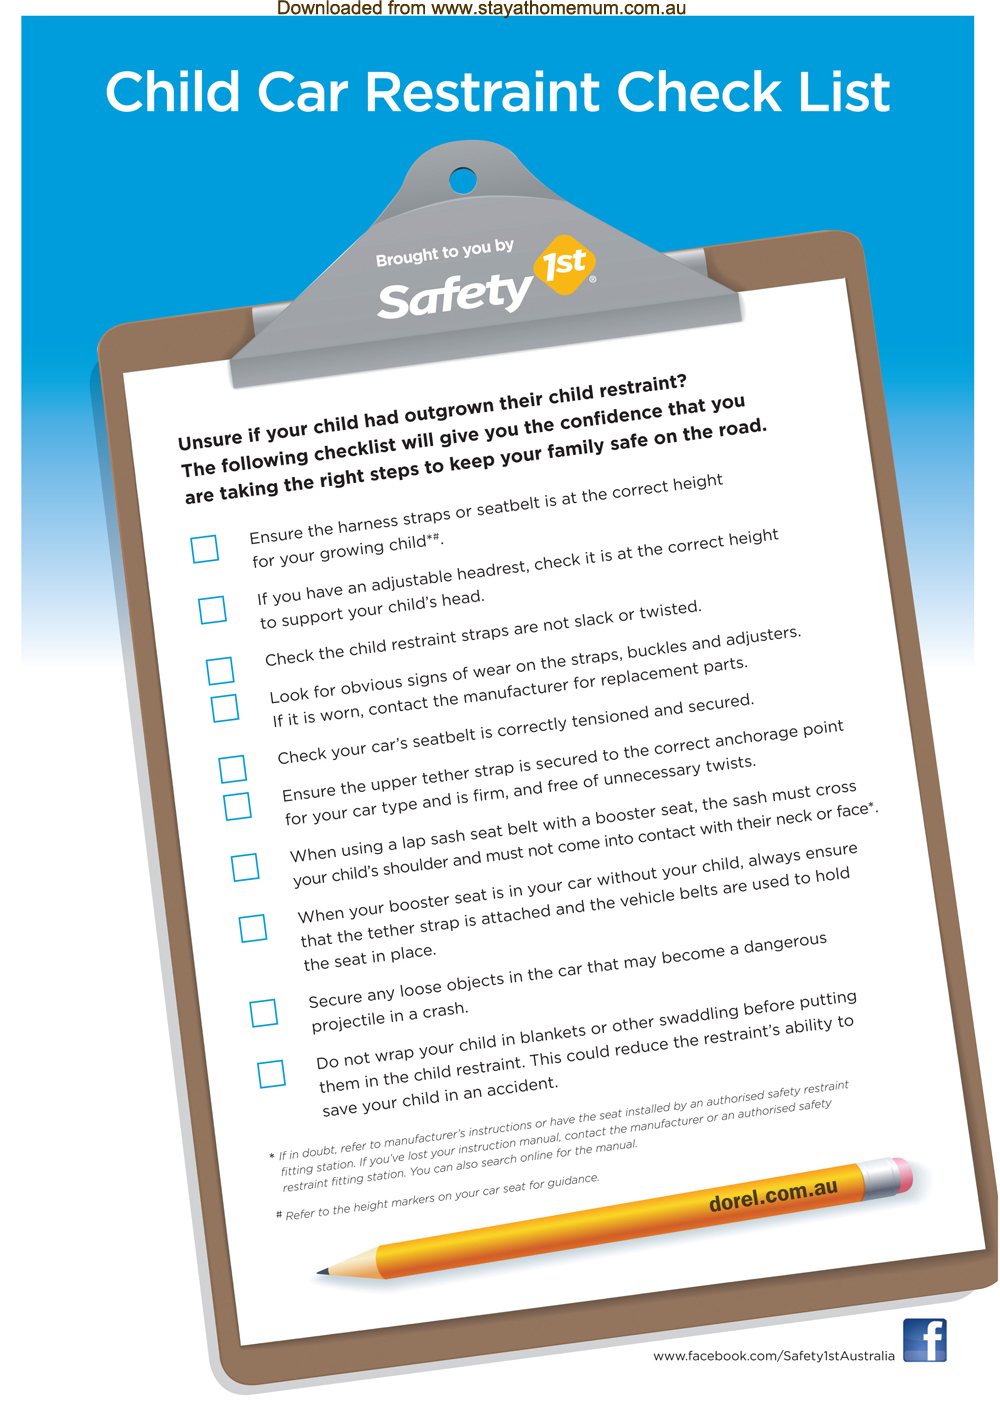 Child Car Restraint Safety Check List